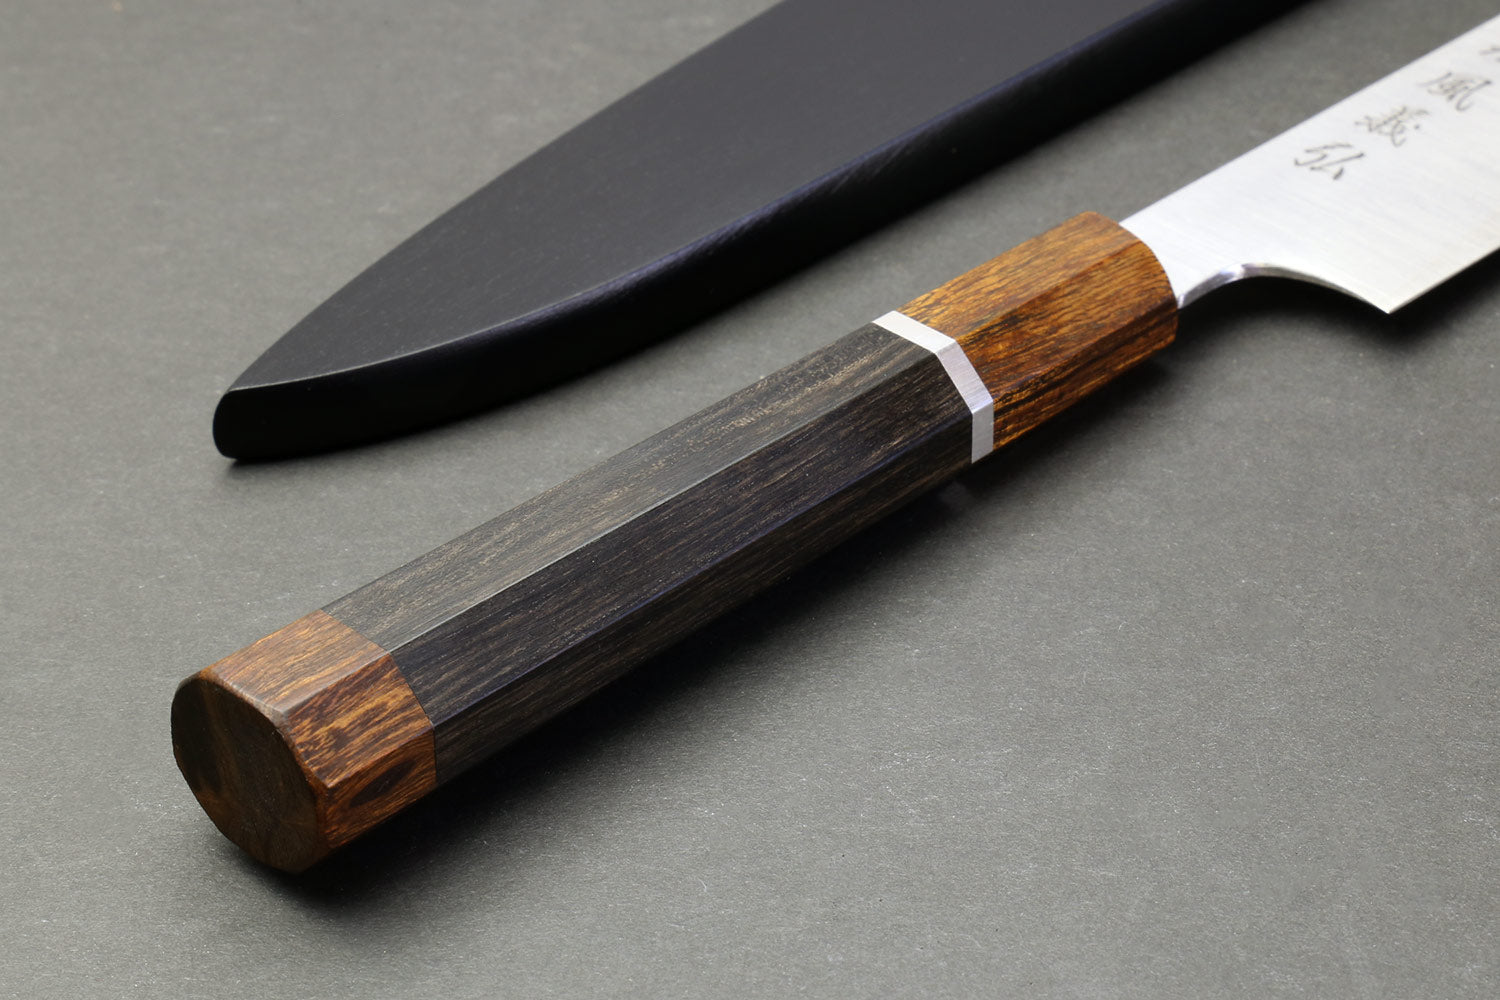  Huusk Japan Knife set, Kiritsuke Knife and Nakiri Chef Knife  with Santoku Knife, High Carbon Steel Hand Forged Knife,Steel Sentinel  Series: Home & Kitchen